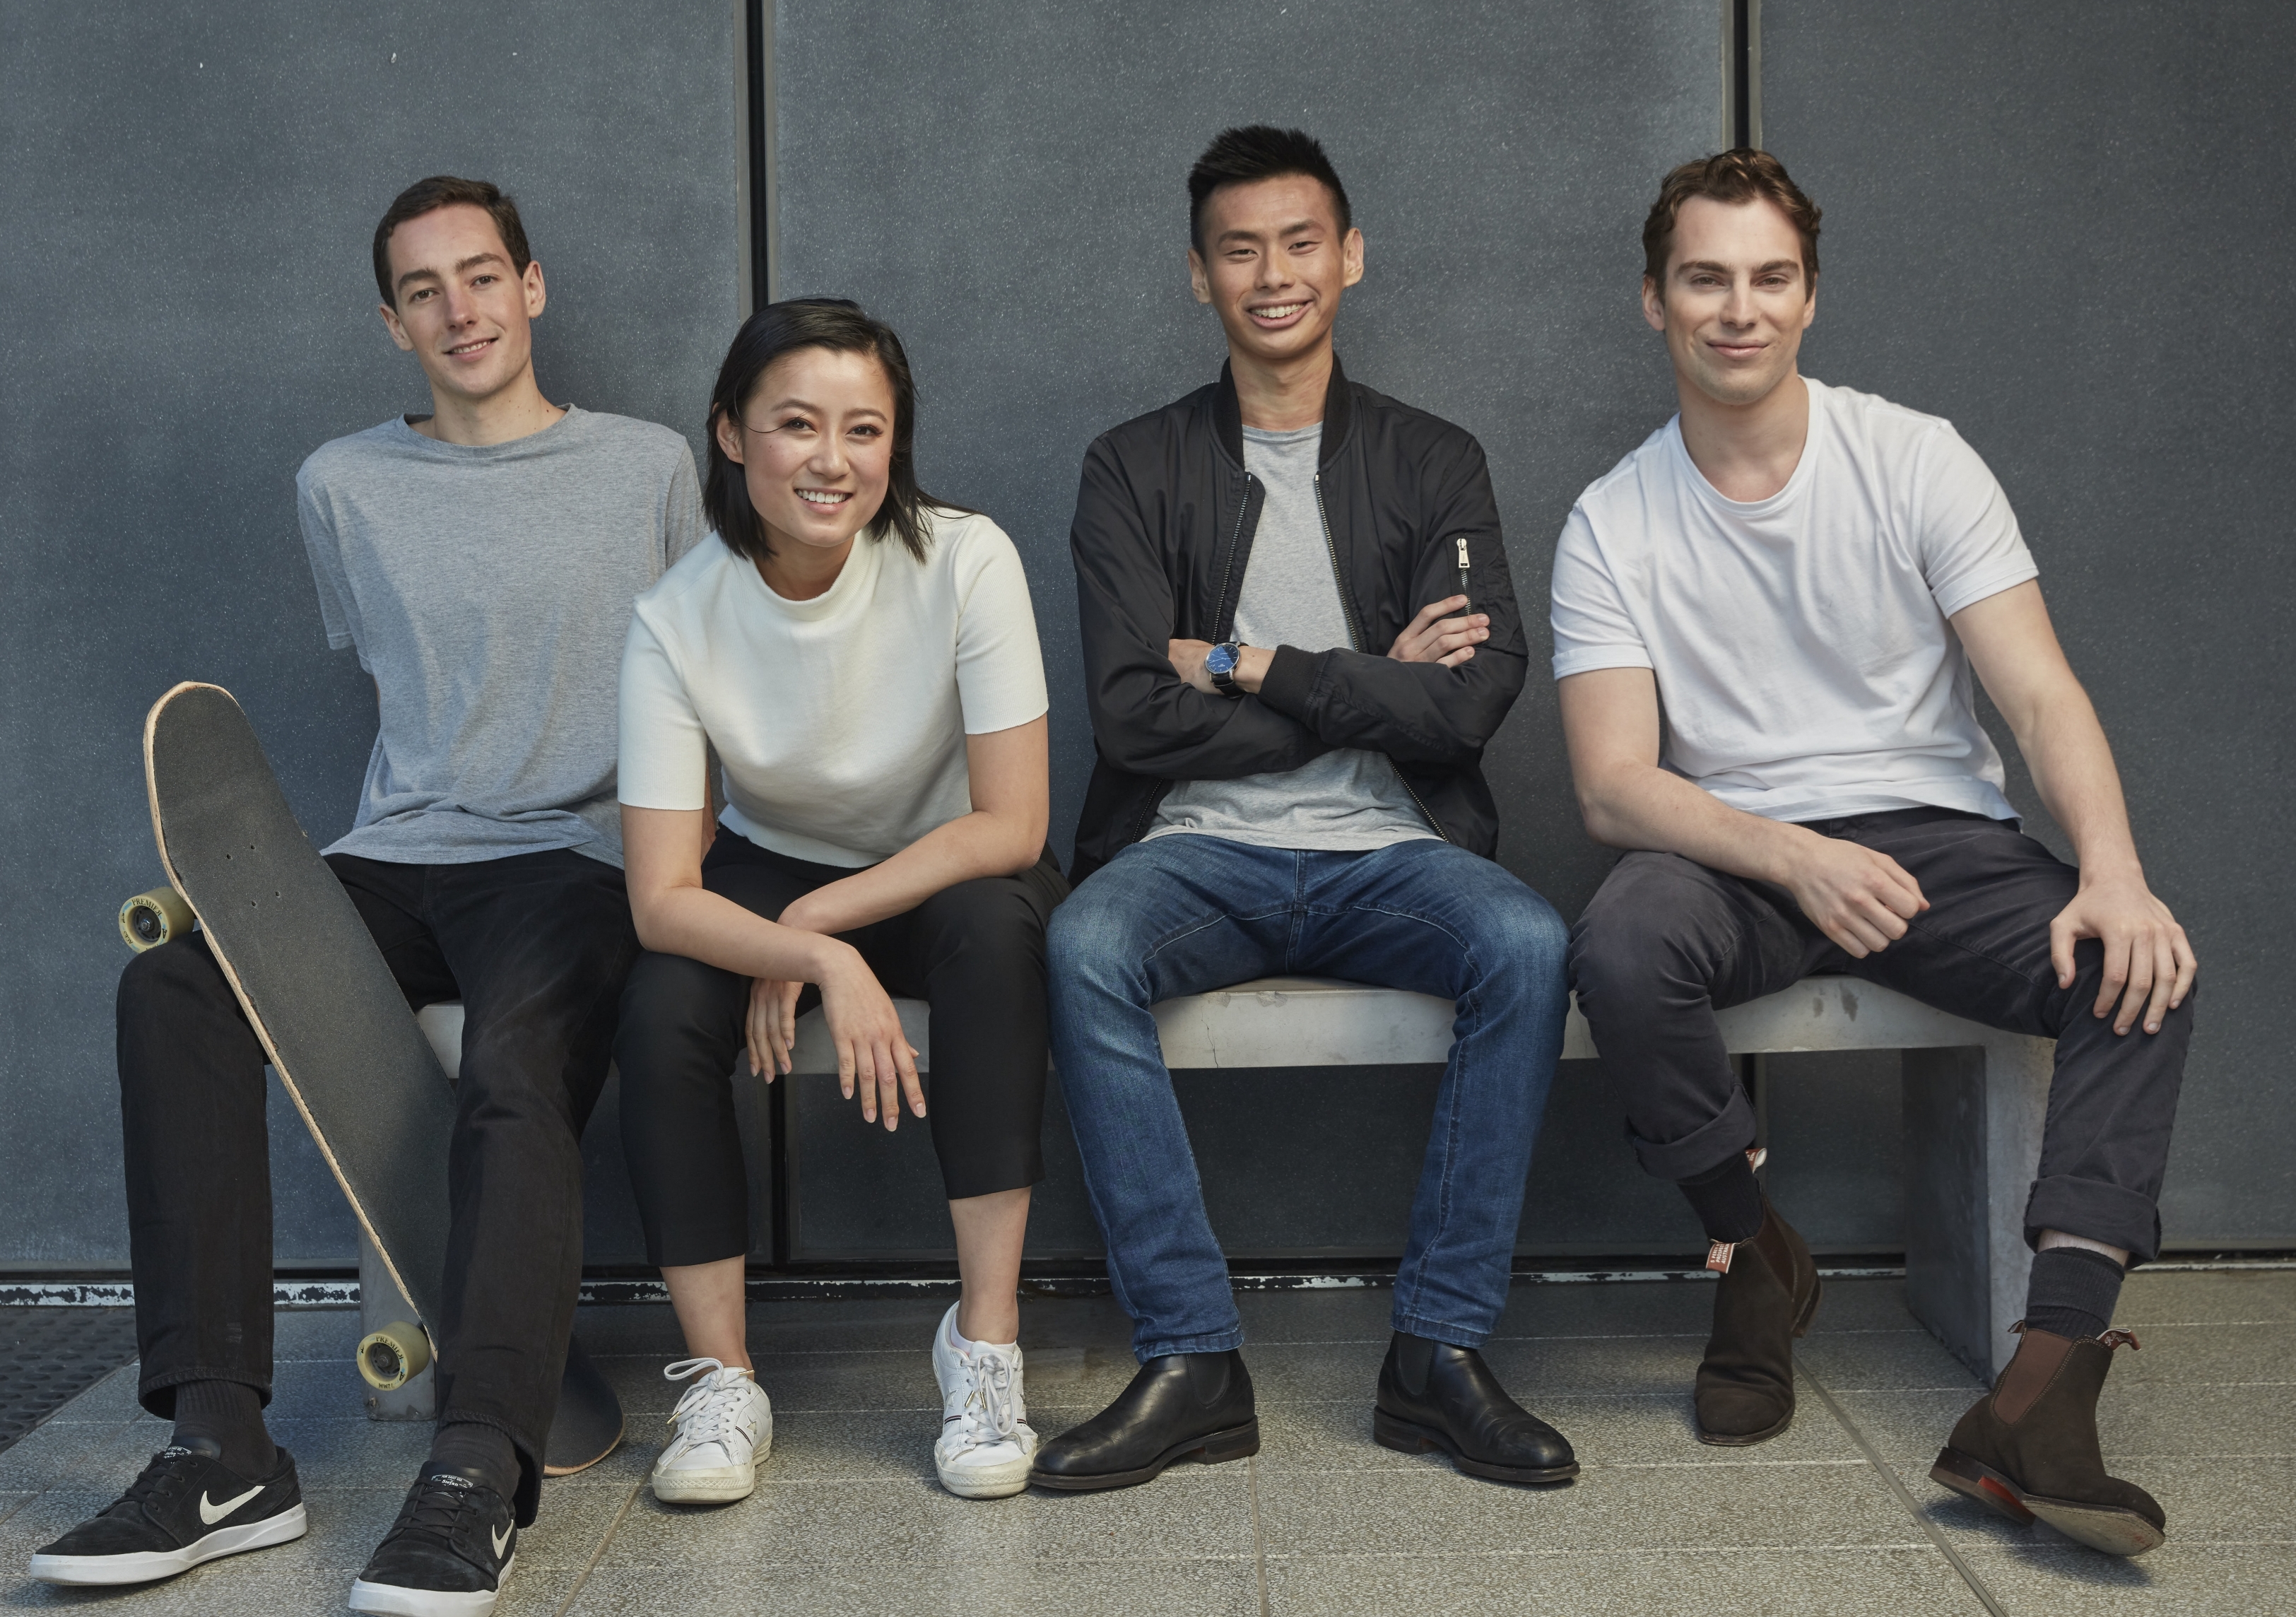 Yellowbox founders Ben Delaney, Vanessa Zhao, Ho Jun Tang and Adrian Brossard.